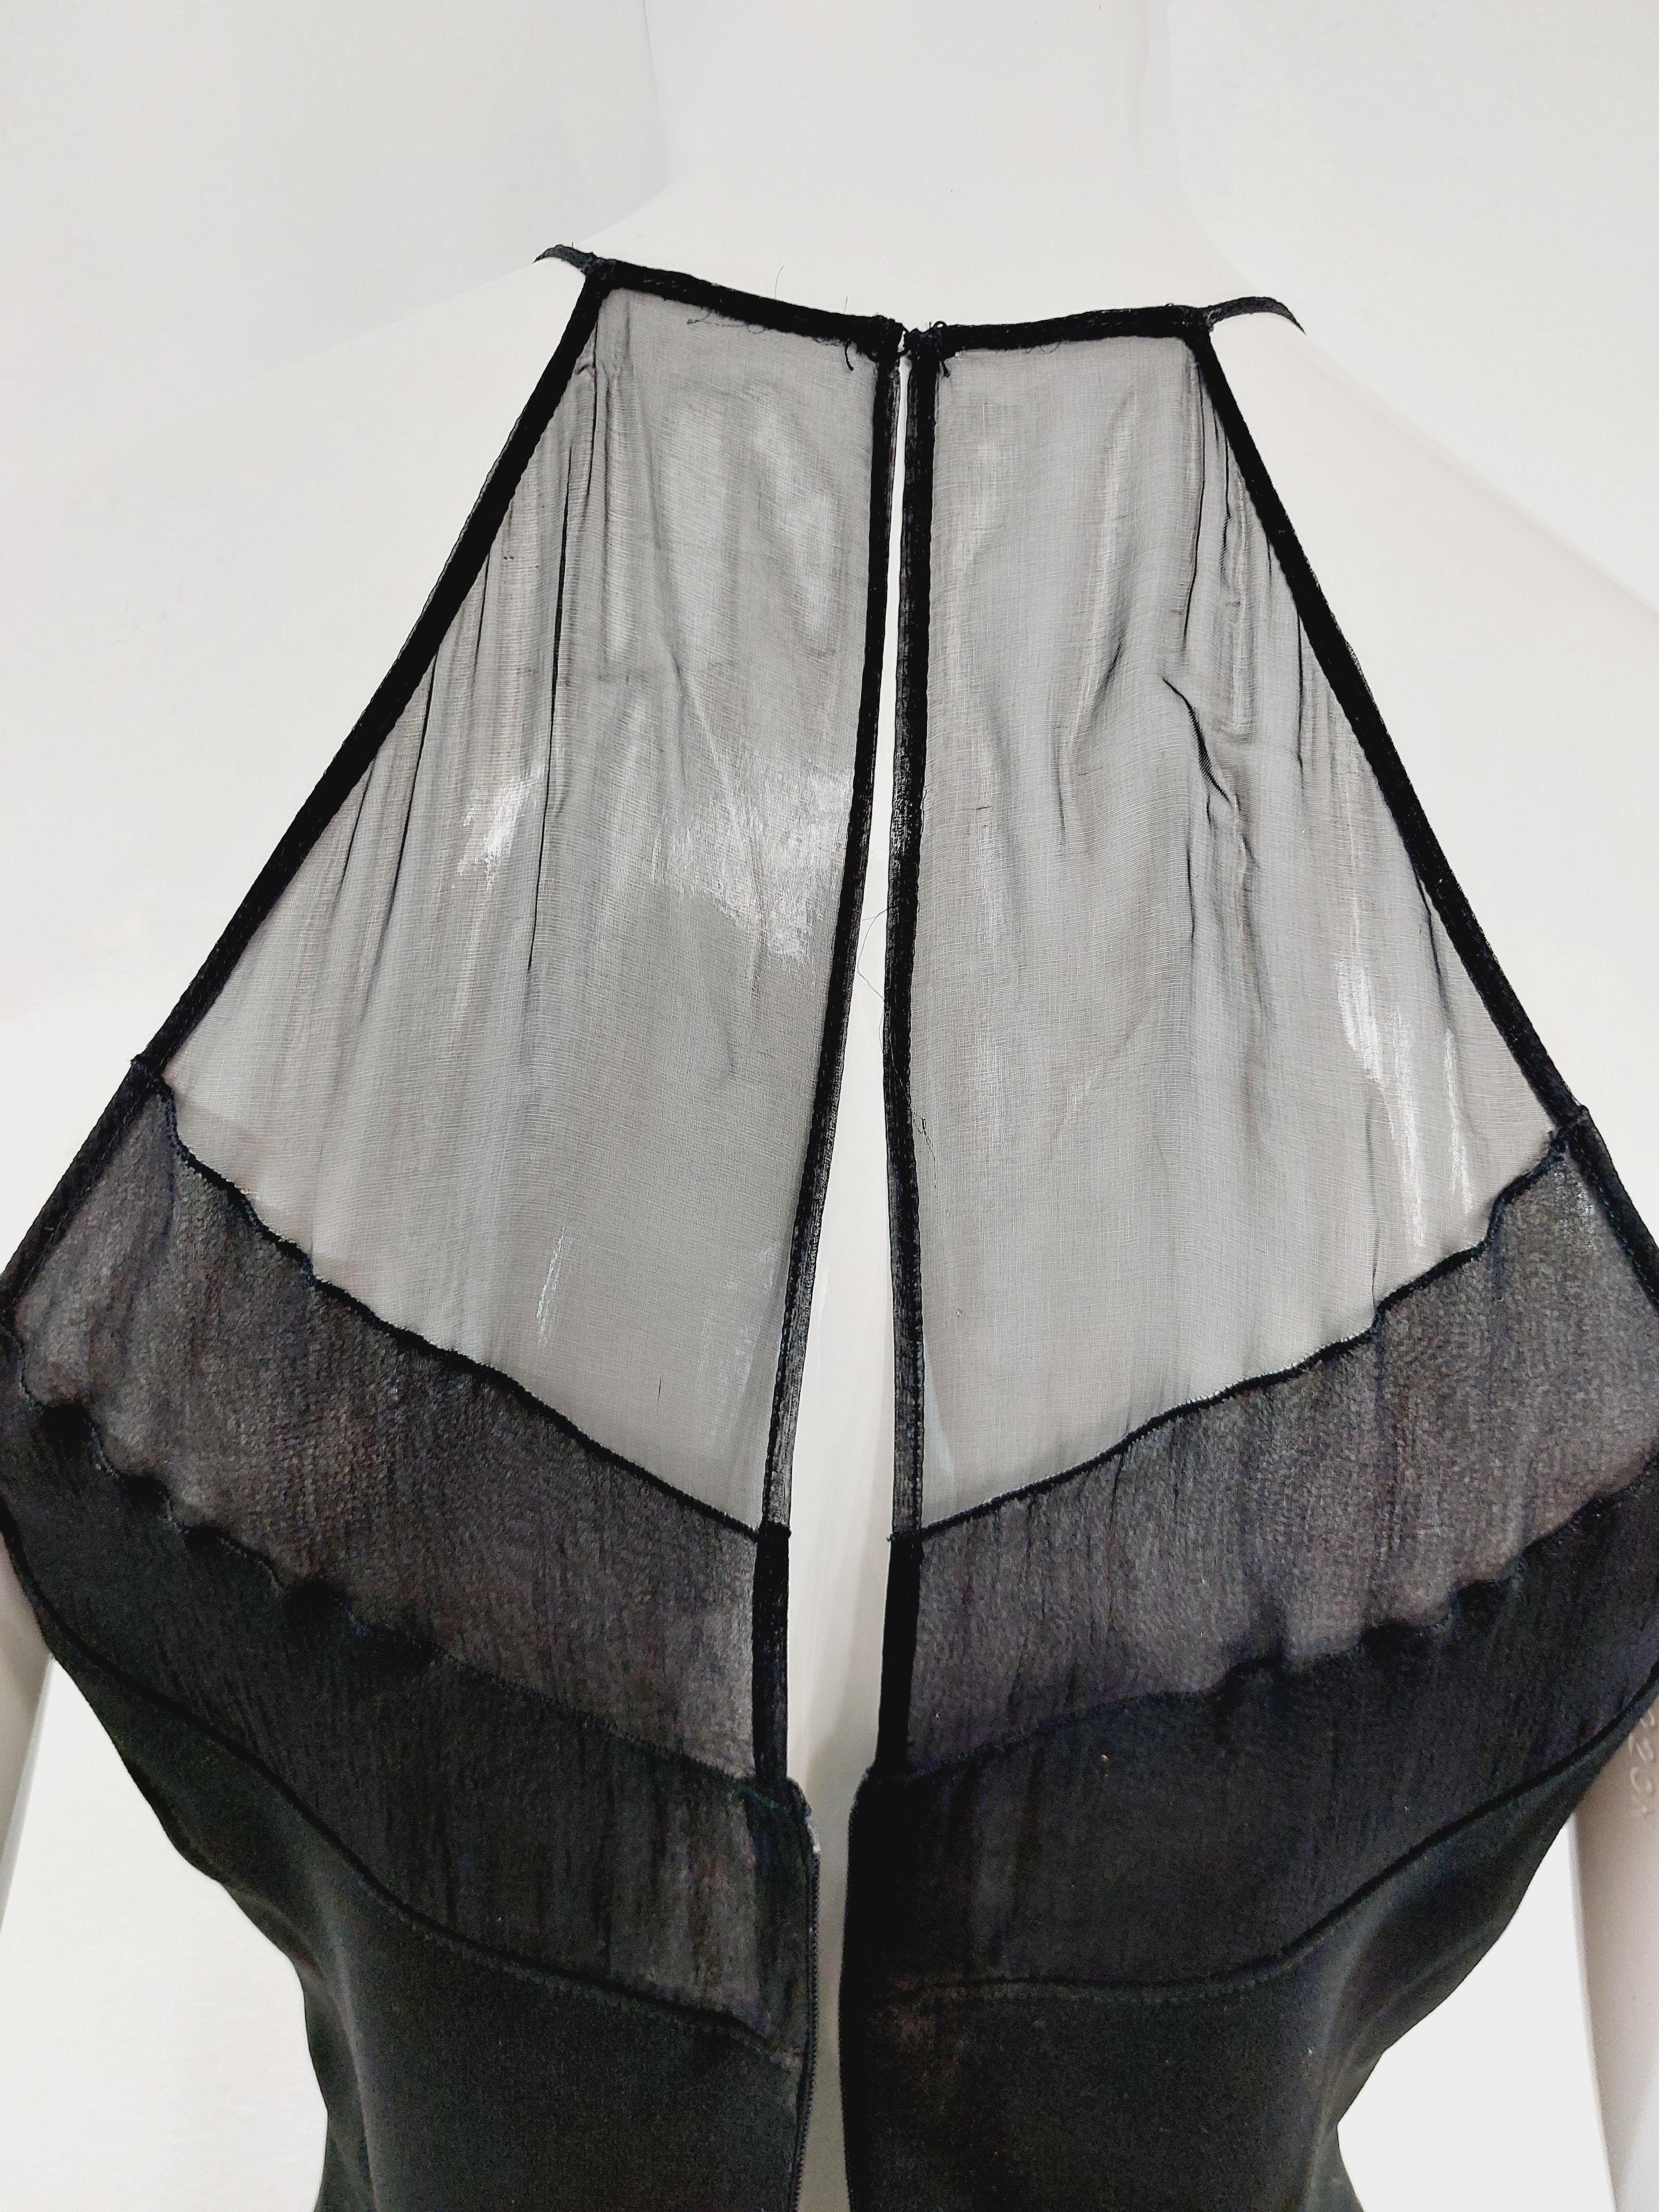 Thierry Mugler Black Elegant Mesh Transparent Formal Cocktail Evening Gown Dress 11